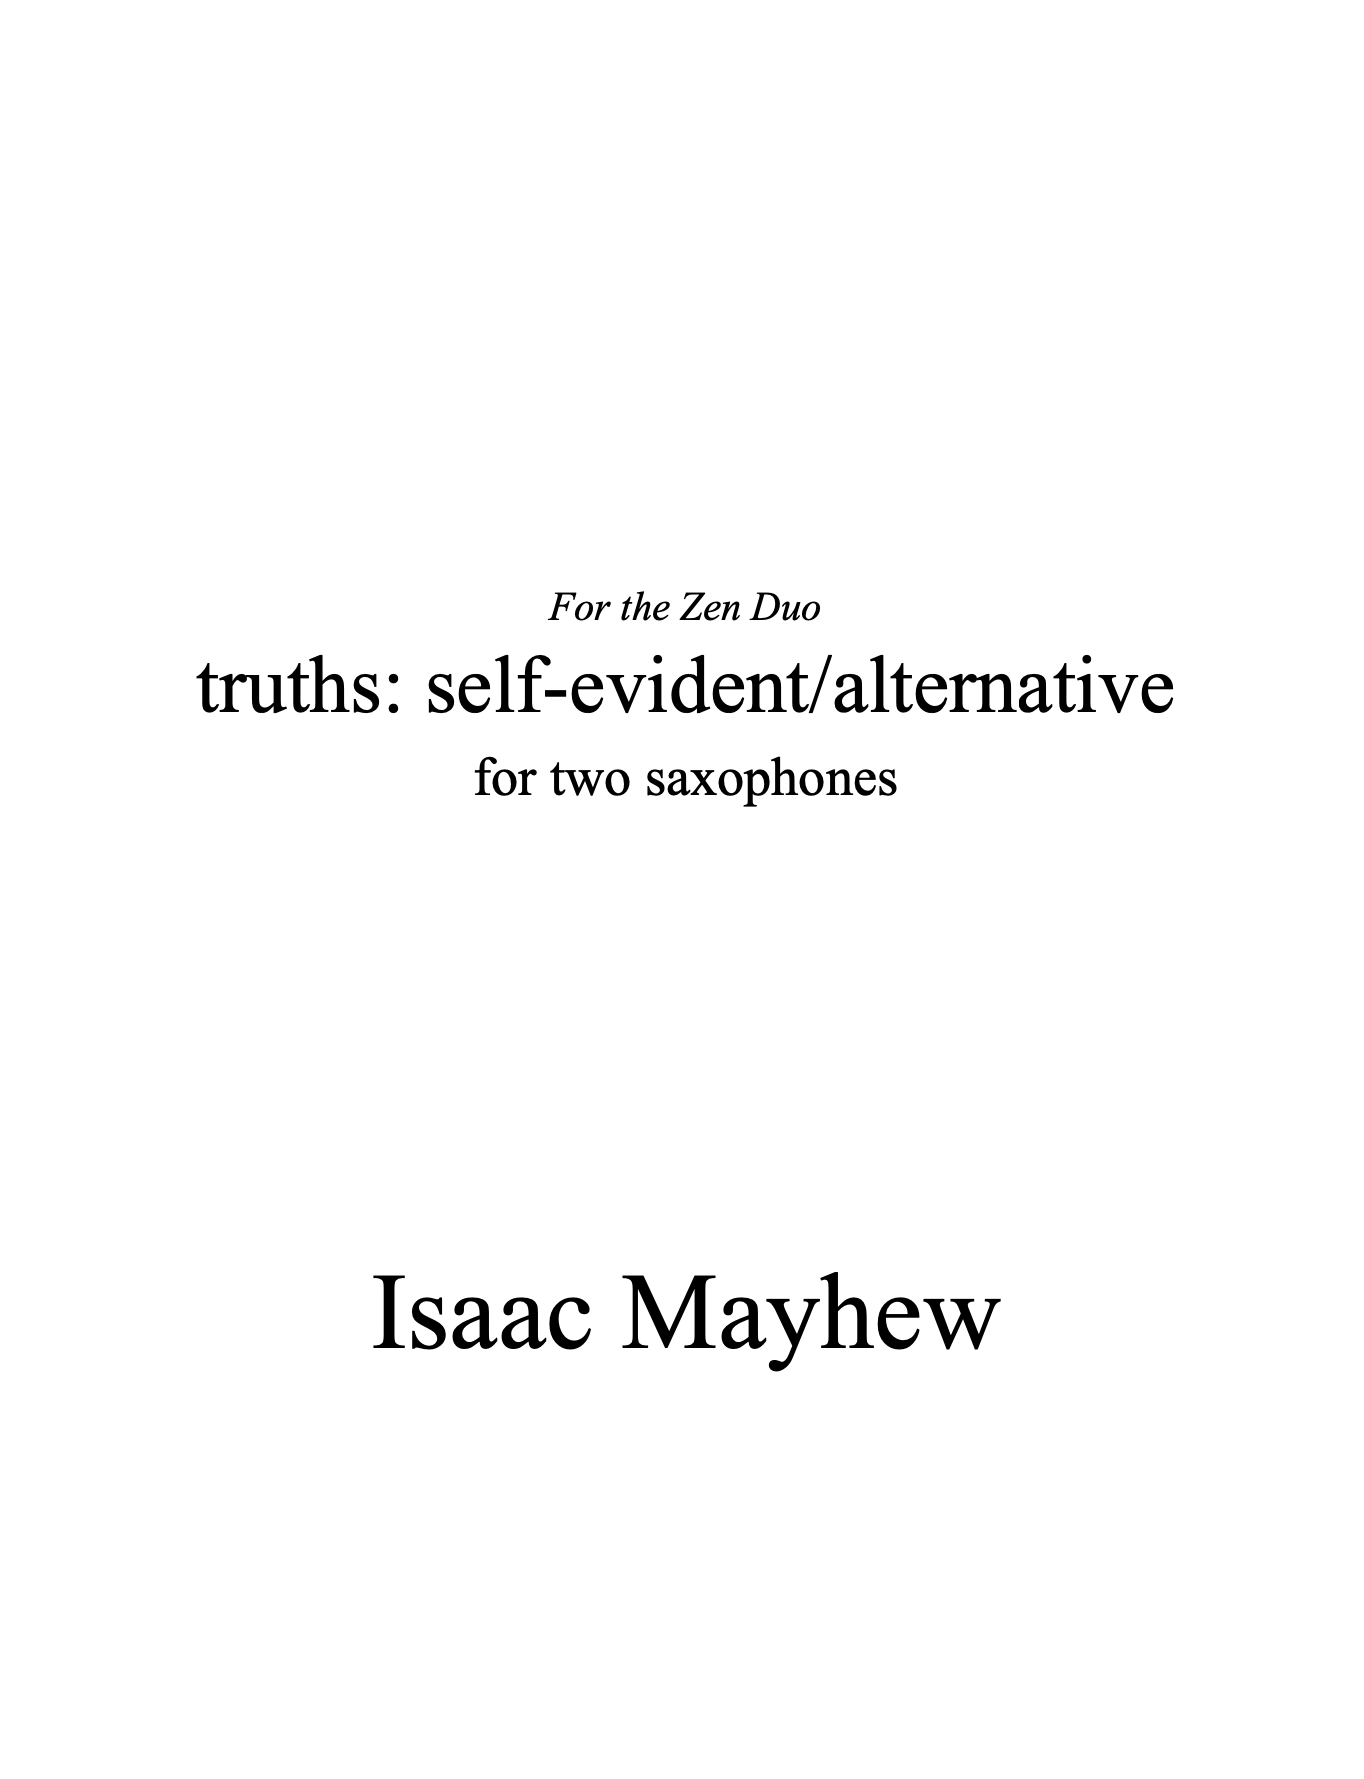 Truths: Self-evident/alternative by Isaac Mayhew